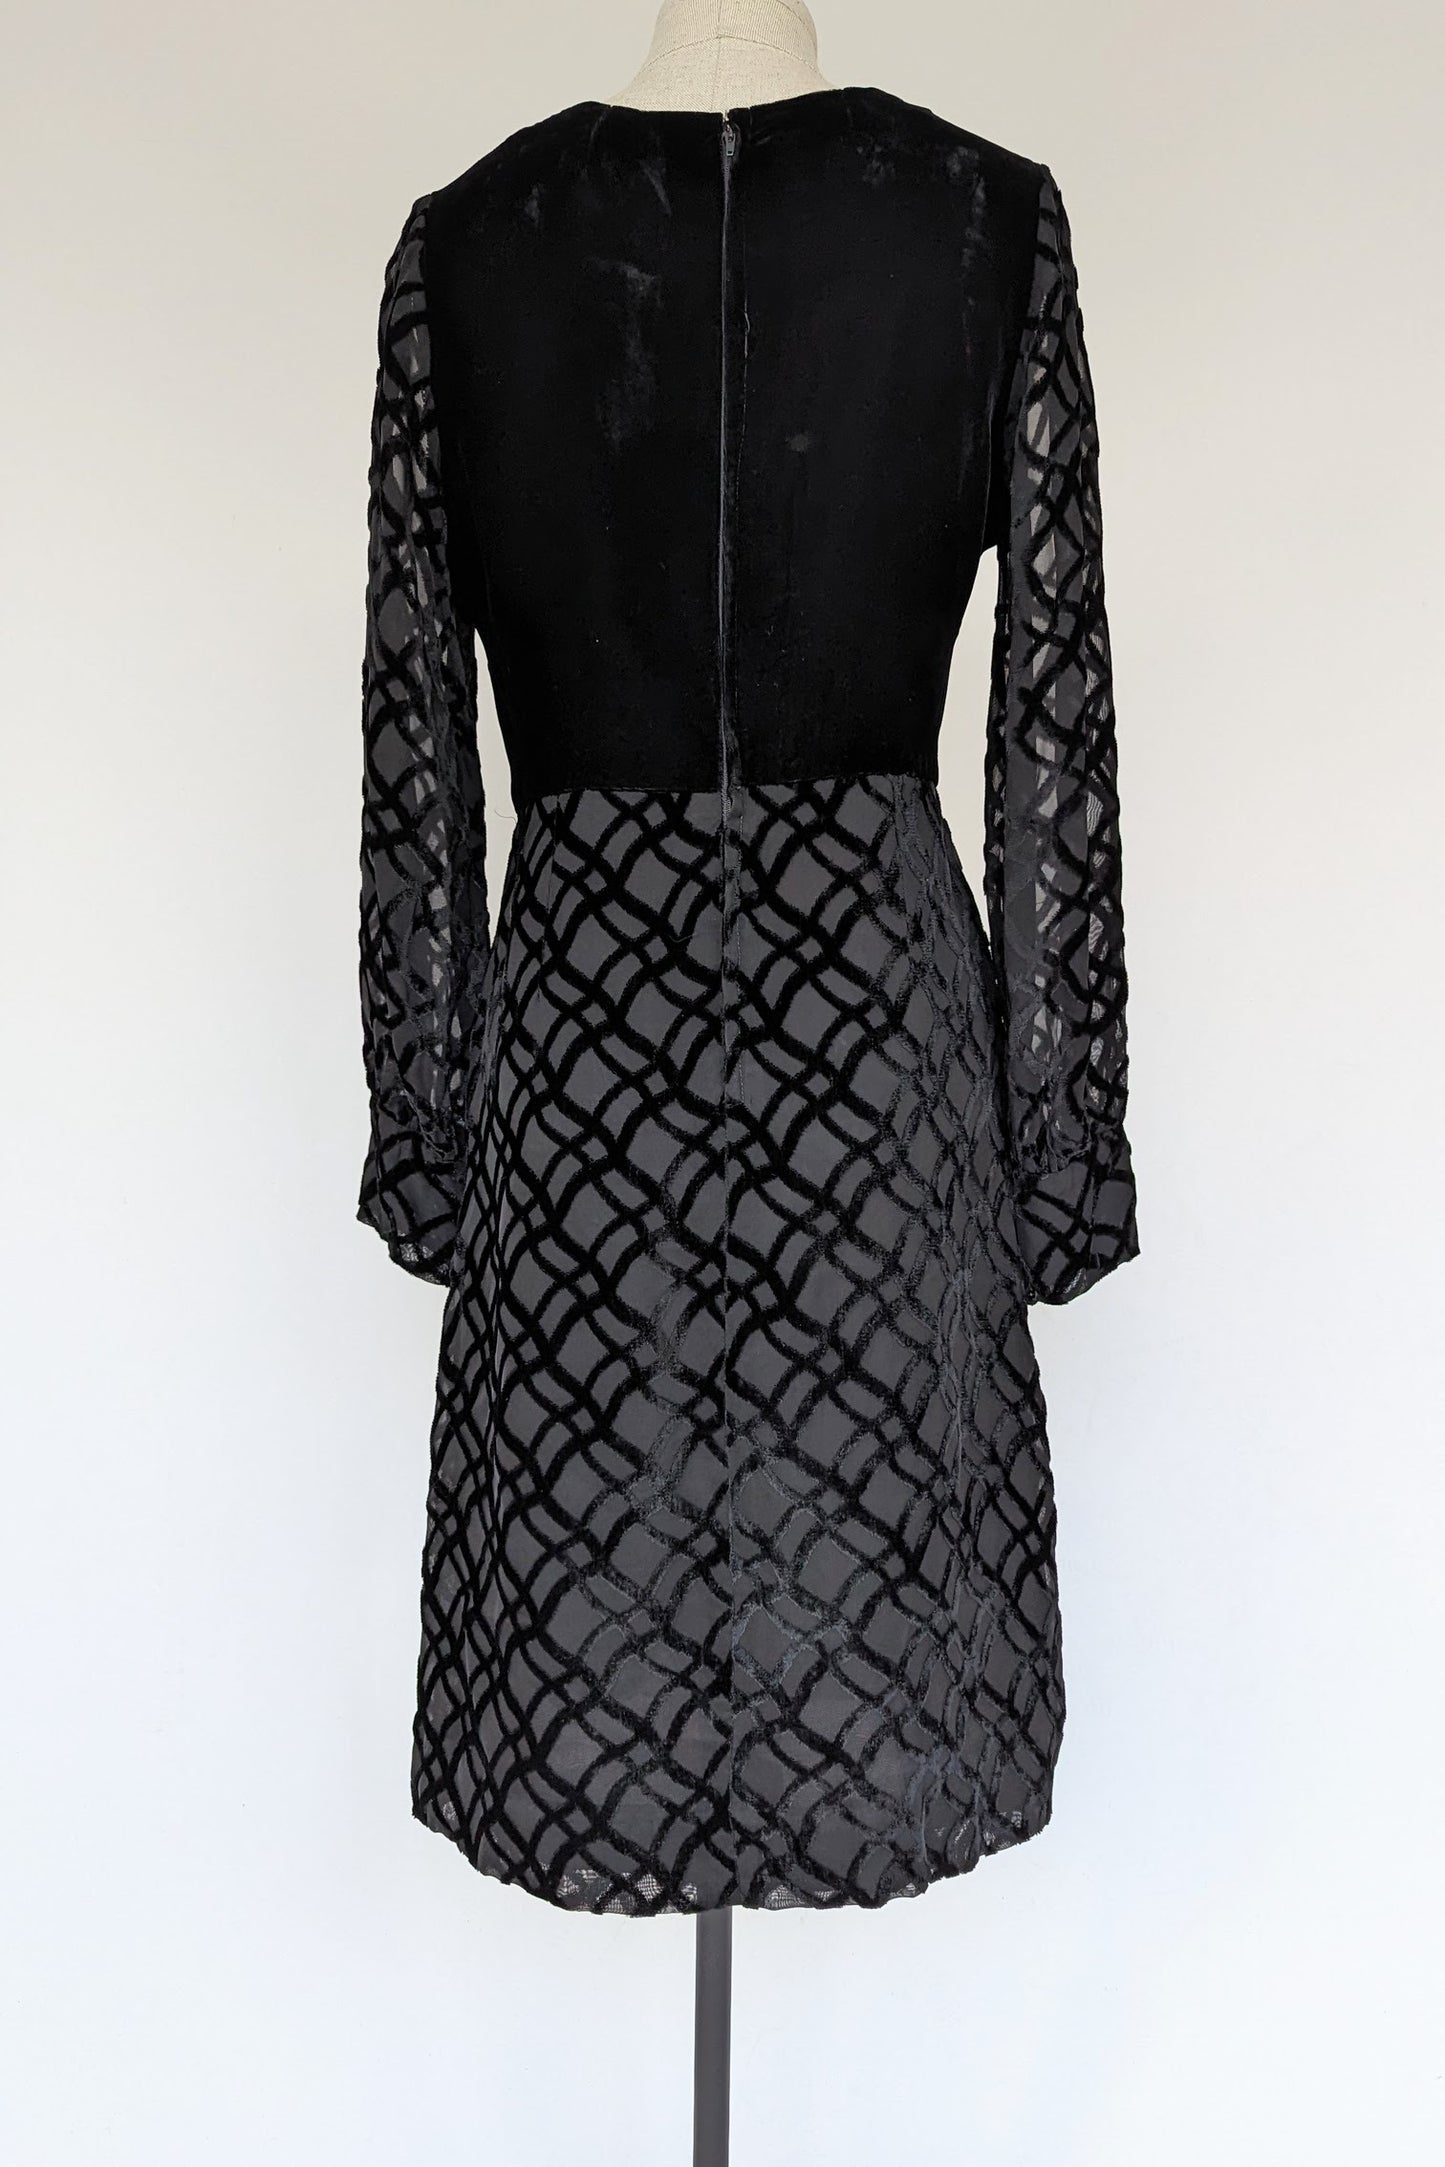 Black vintage party dress